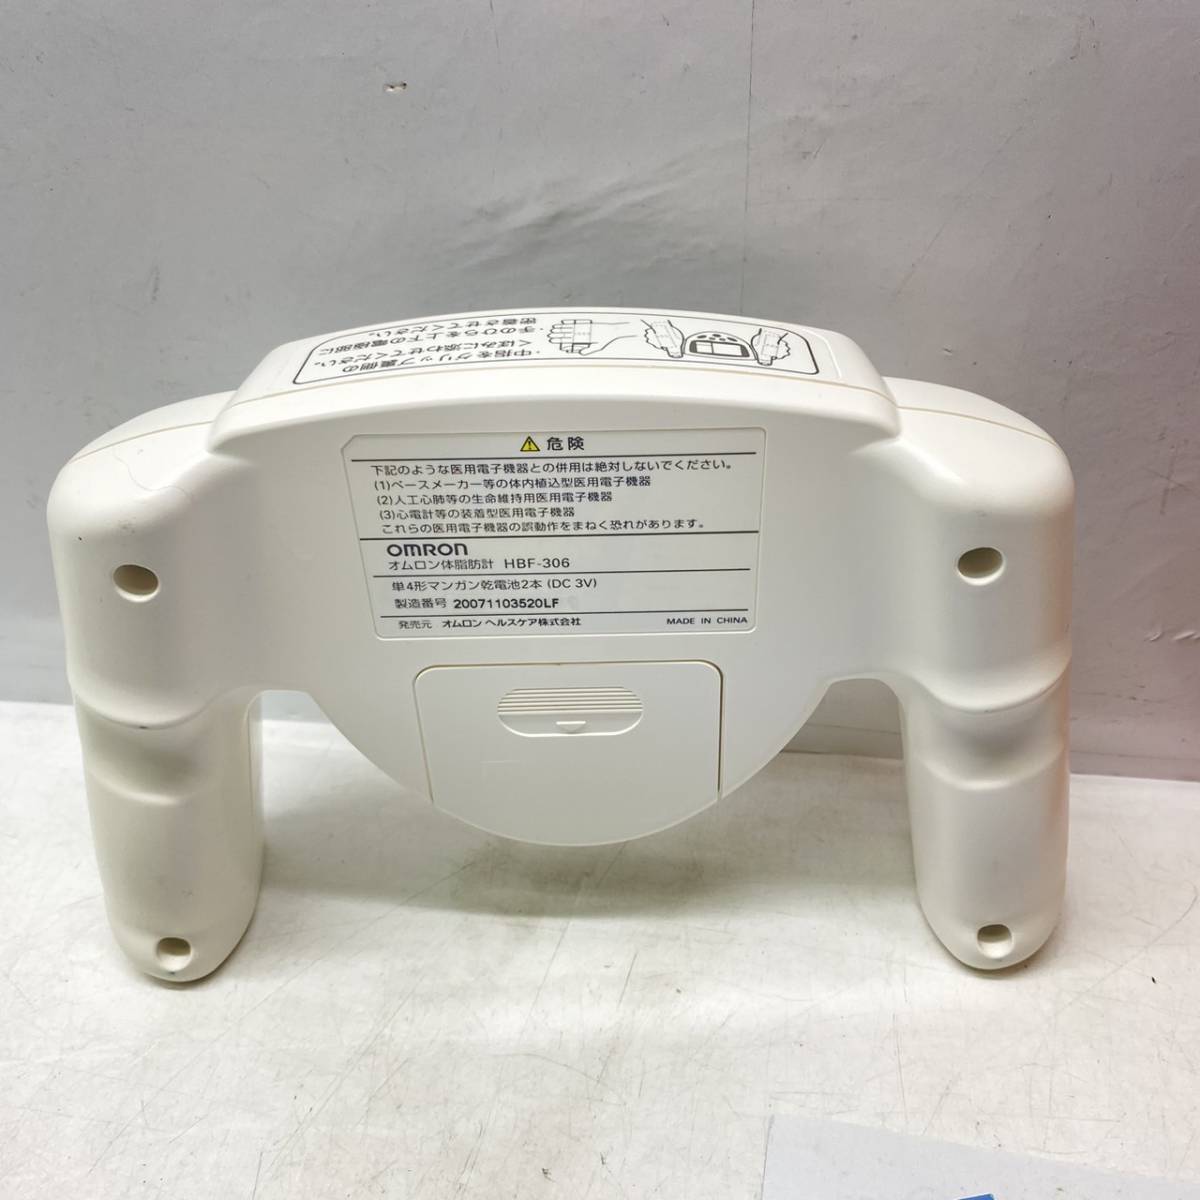  free shipping g14696 Omron body fat meter HBF-306-W white 